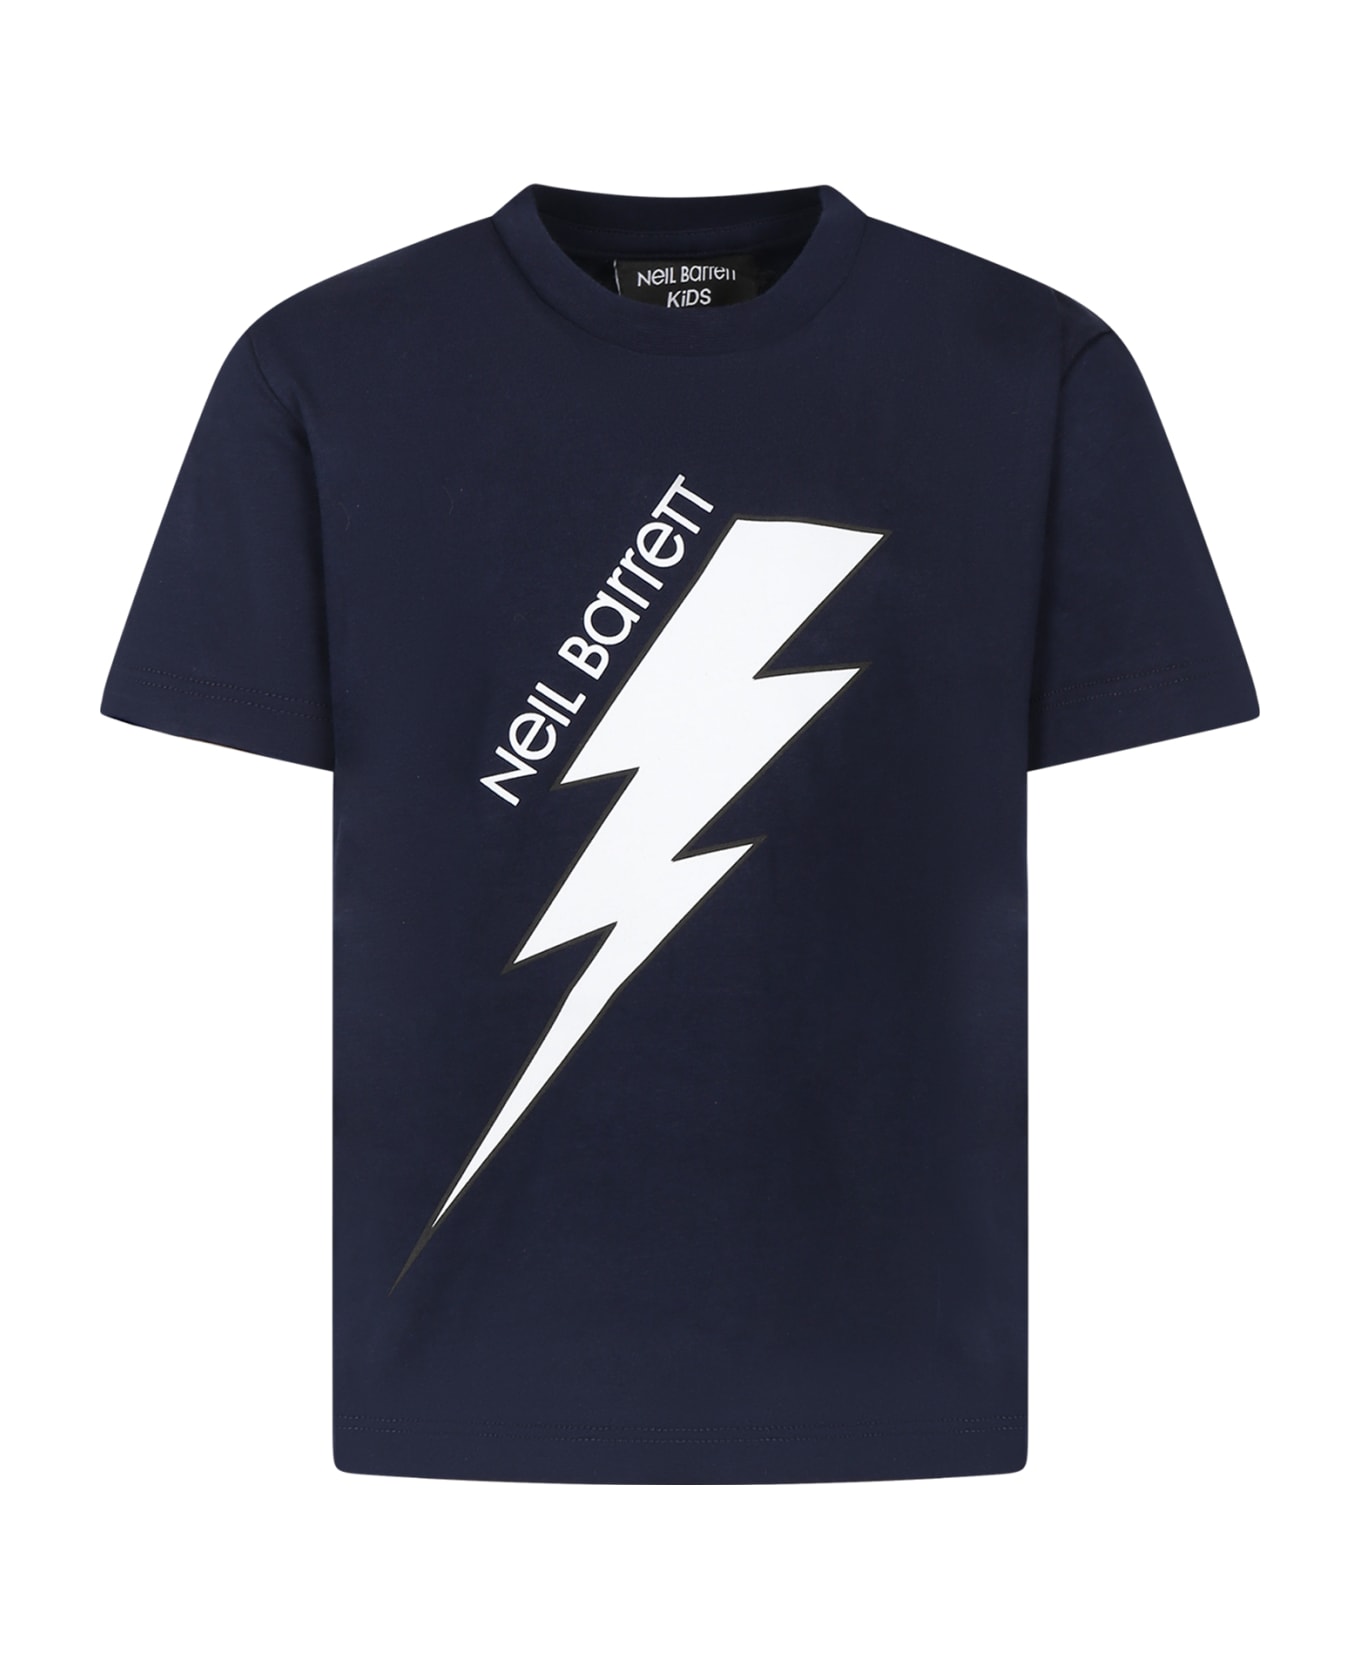 Neil Barrett Blue T-shirt For Boy With Iconic Lightning Bolt And Logo - Blue